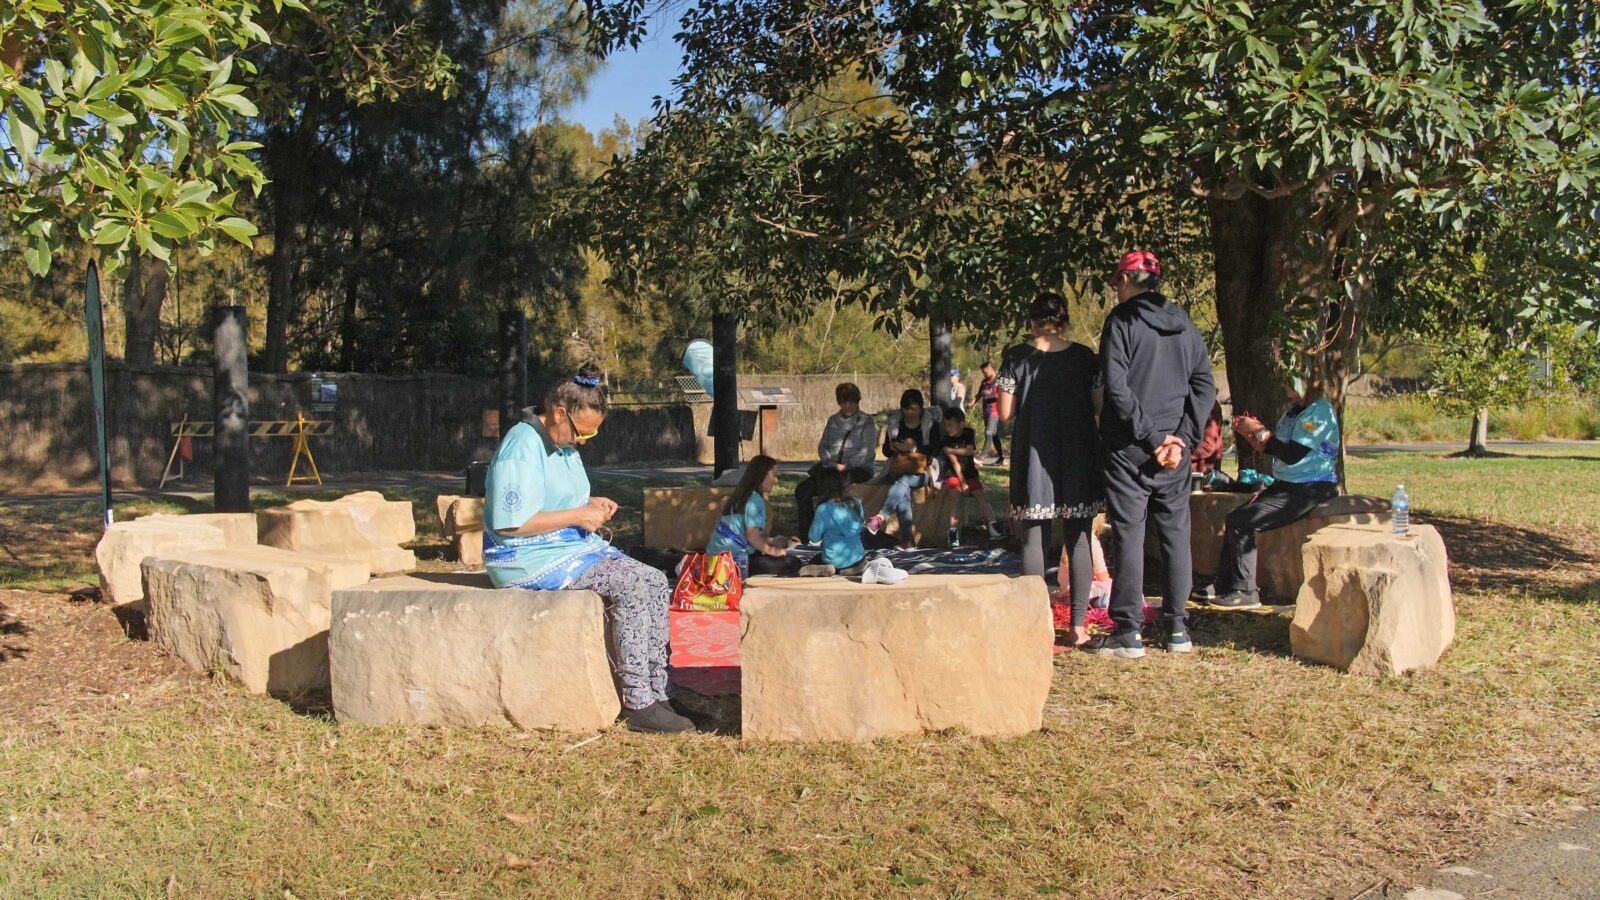 People seated around yarning circle of sandstone blocks.